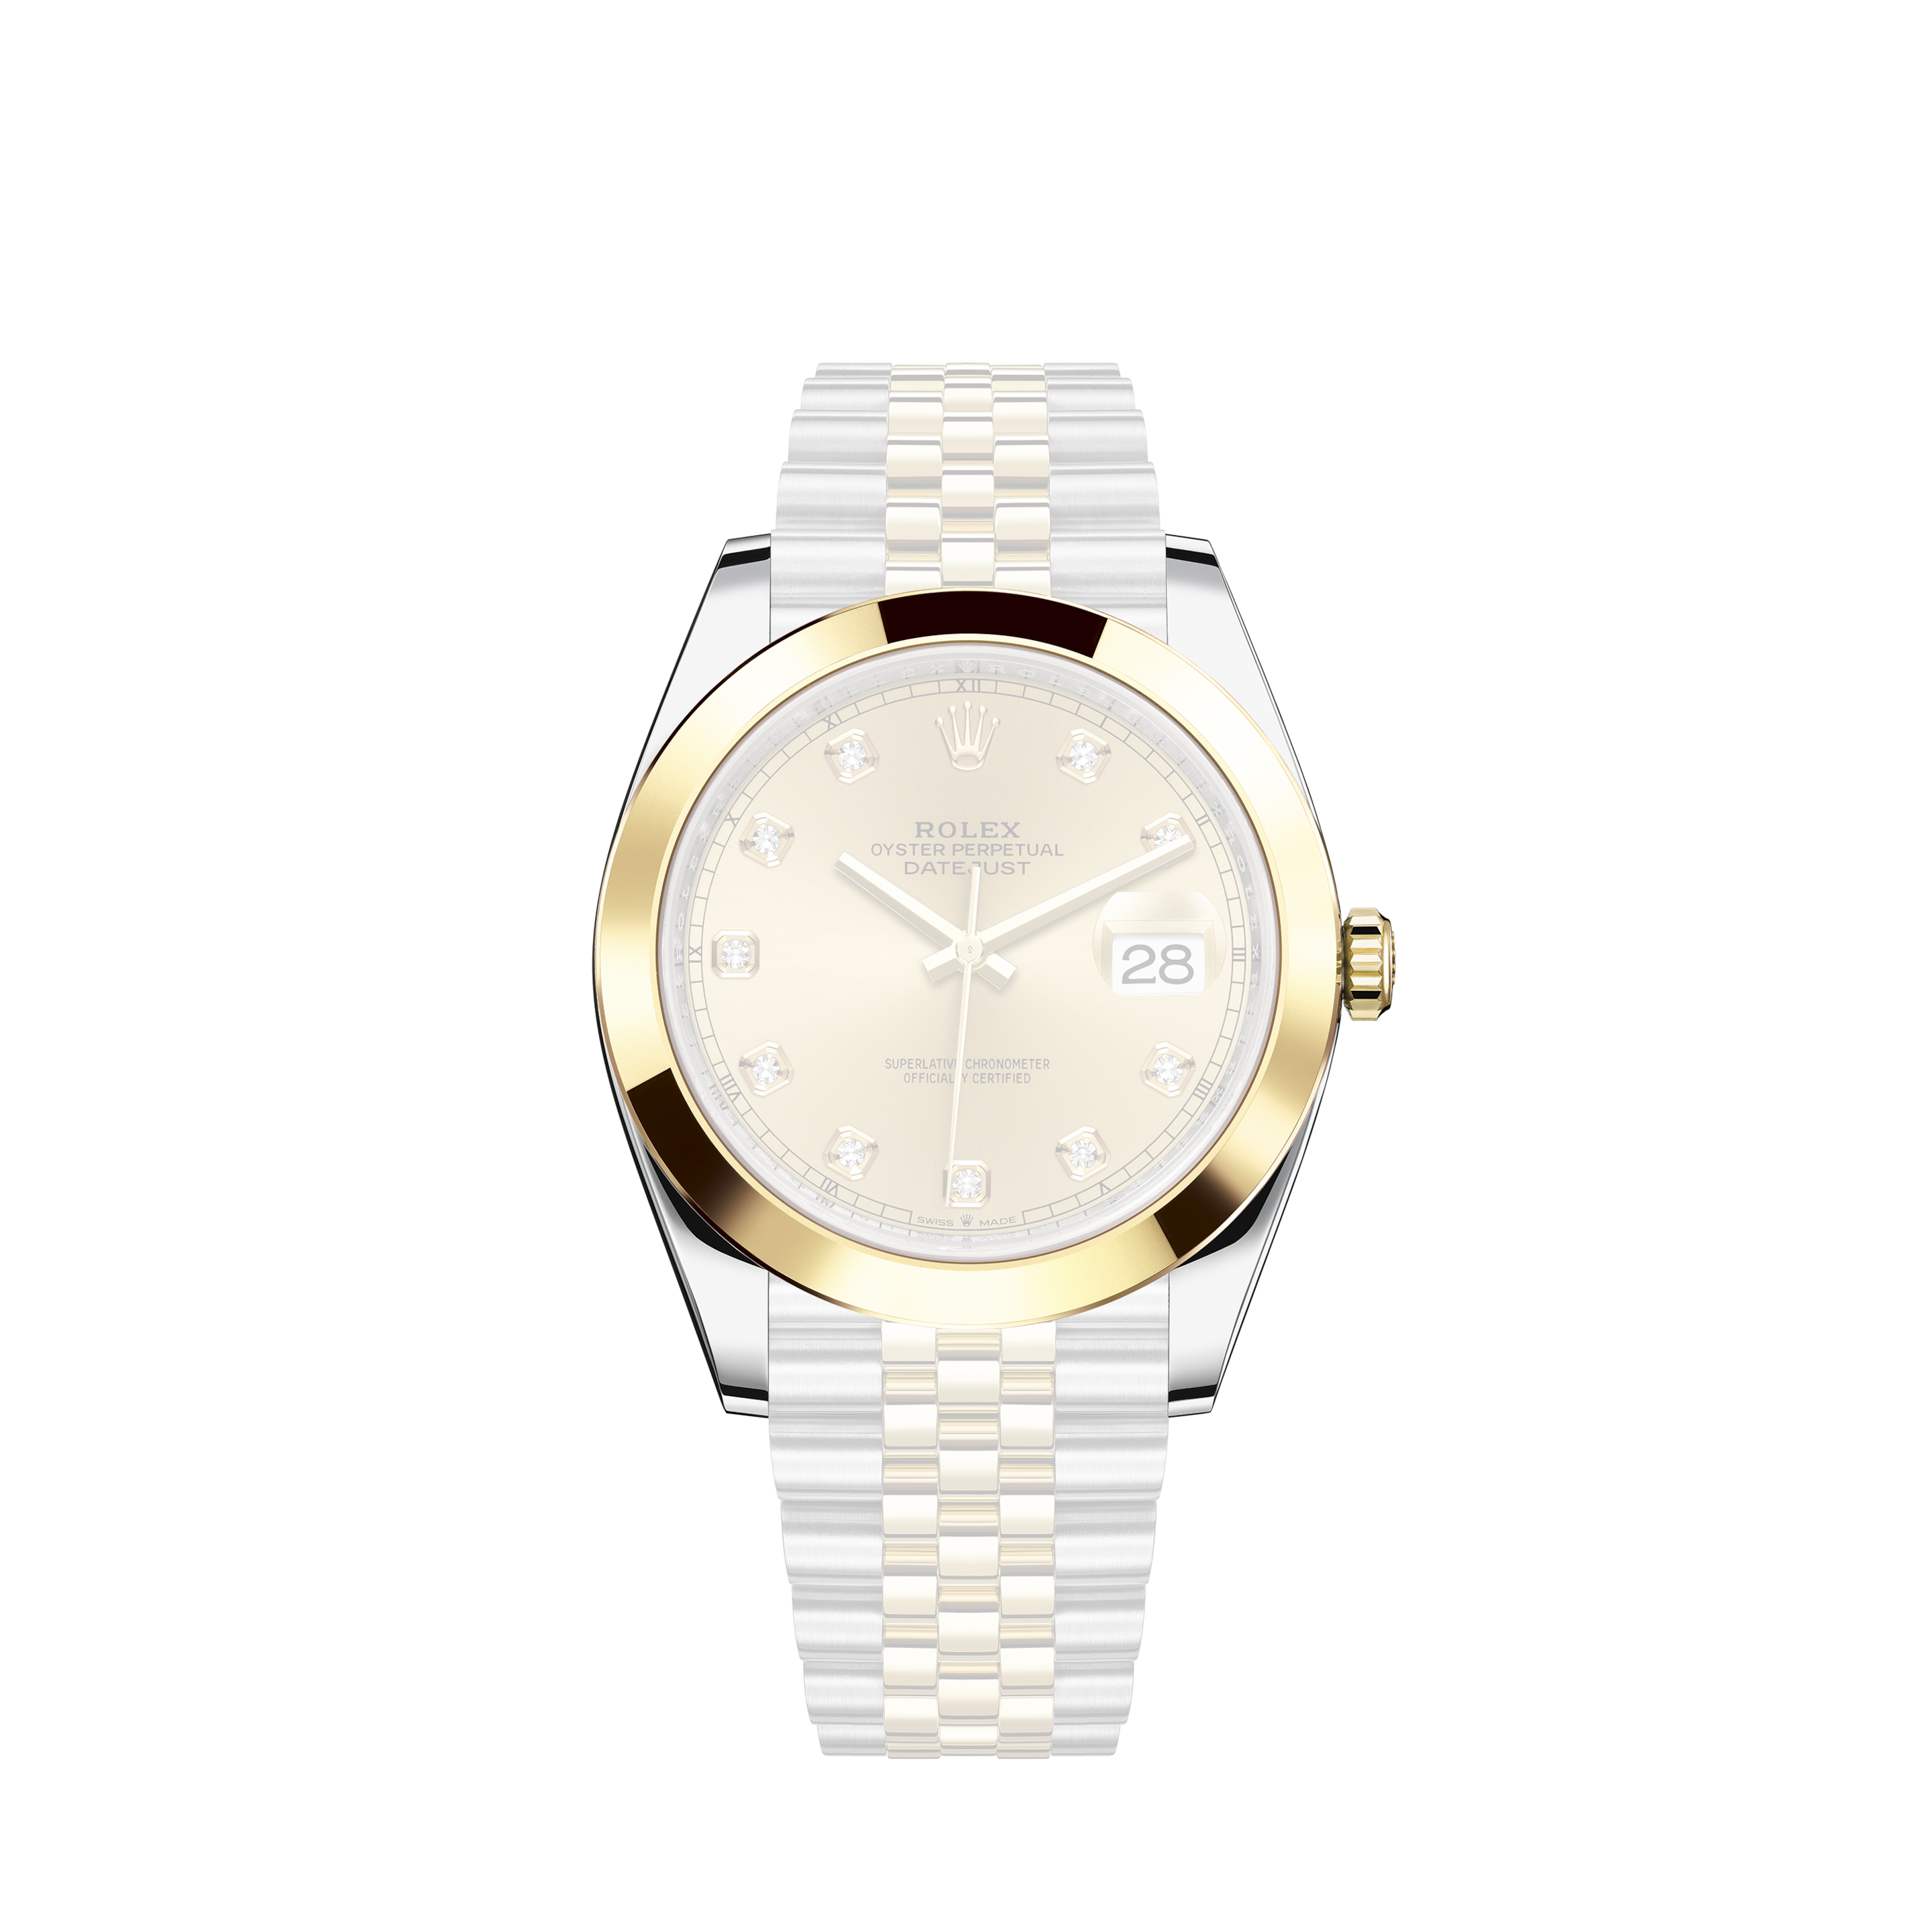 Rolex New Release Datejust 36 Wimbledon Dial Stainless Steel Watch 2021Rolex New Release Explorer II 226570 Black 42mm